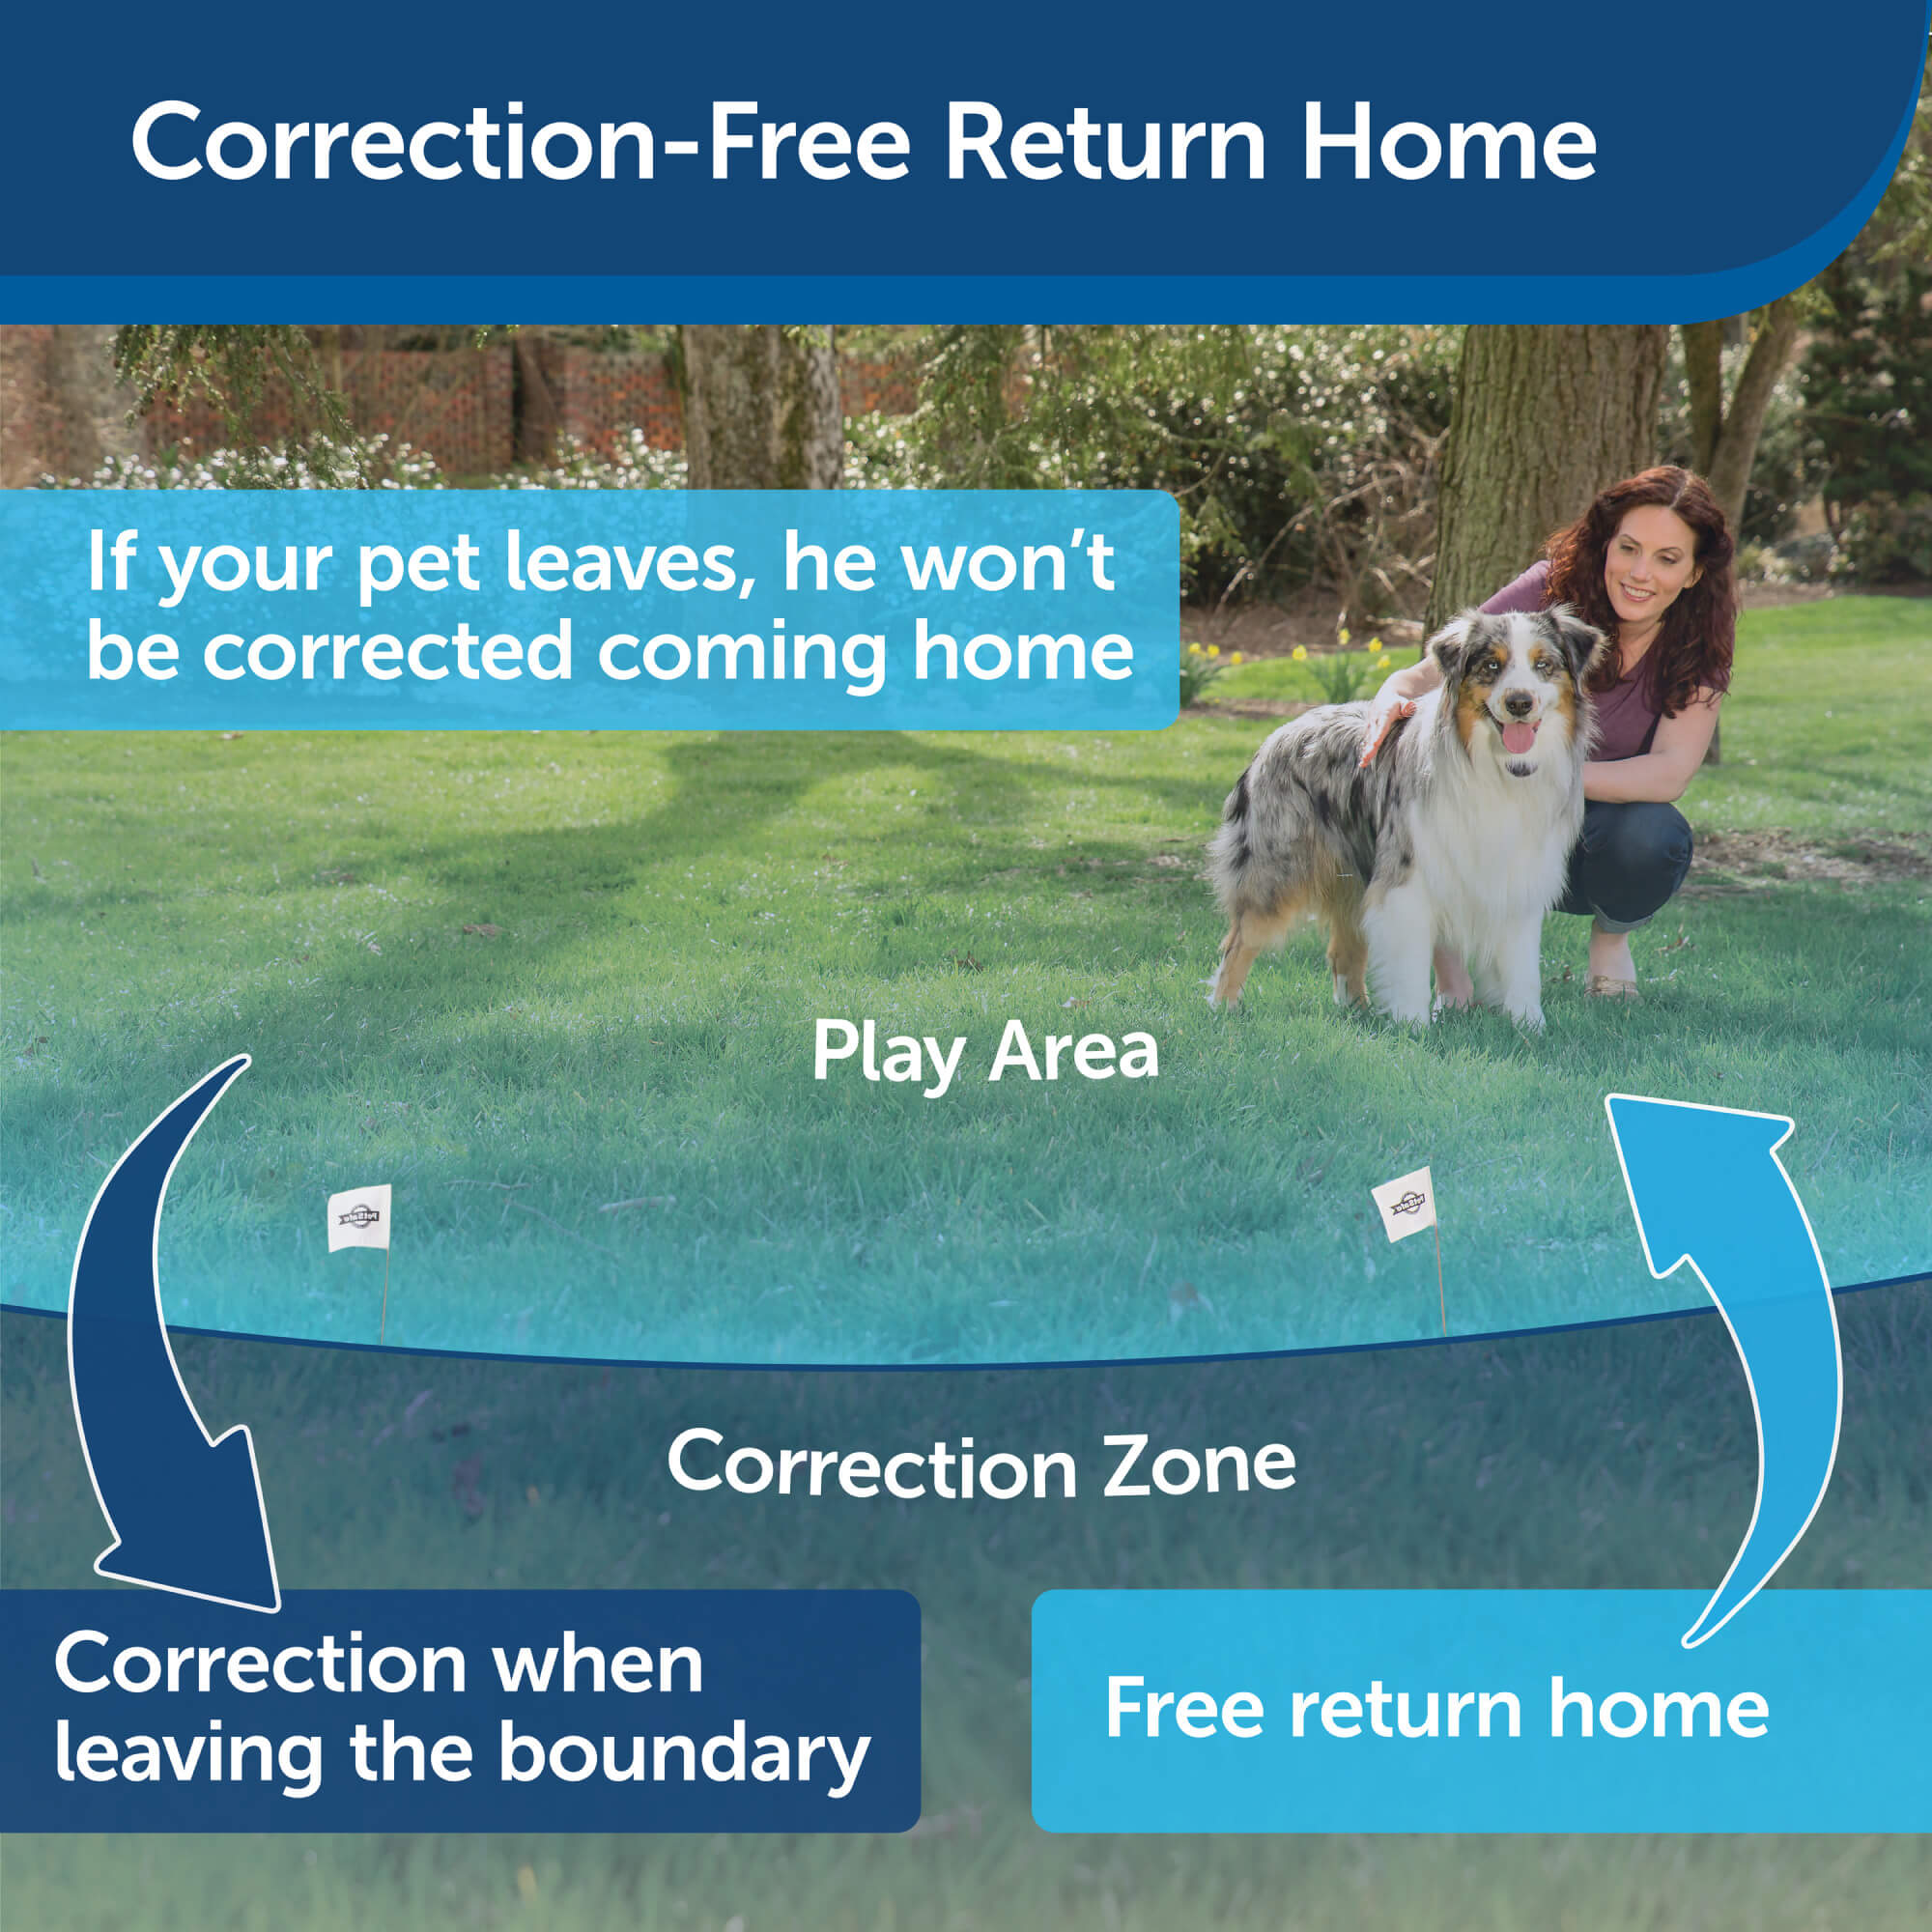 Correction-free return home